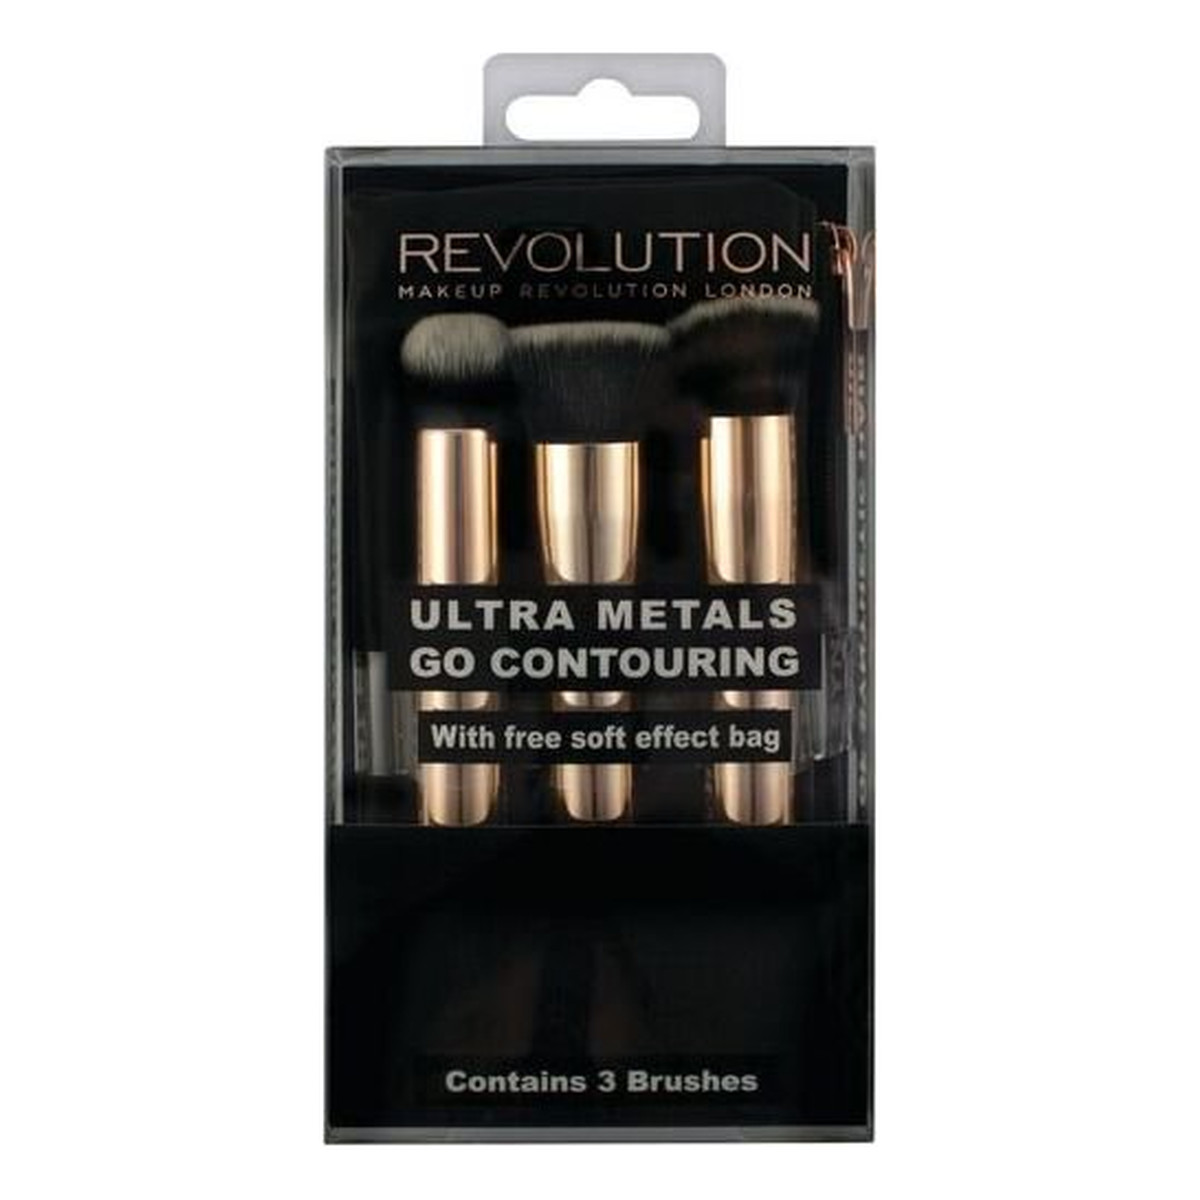 Makeup Revolution Ultra Metals Go Contouring Zestaw 3 Pędzli Do Konturowania Twarzy